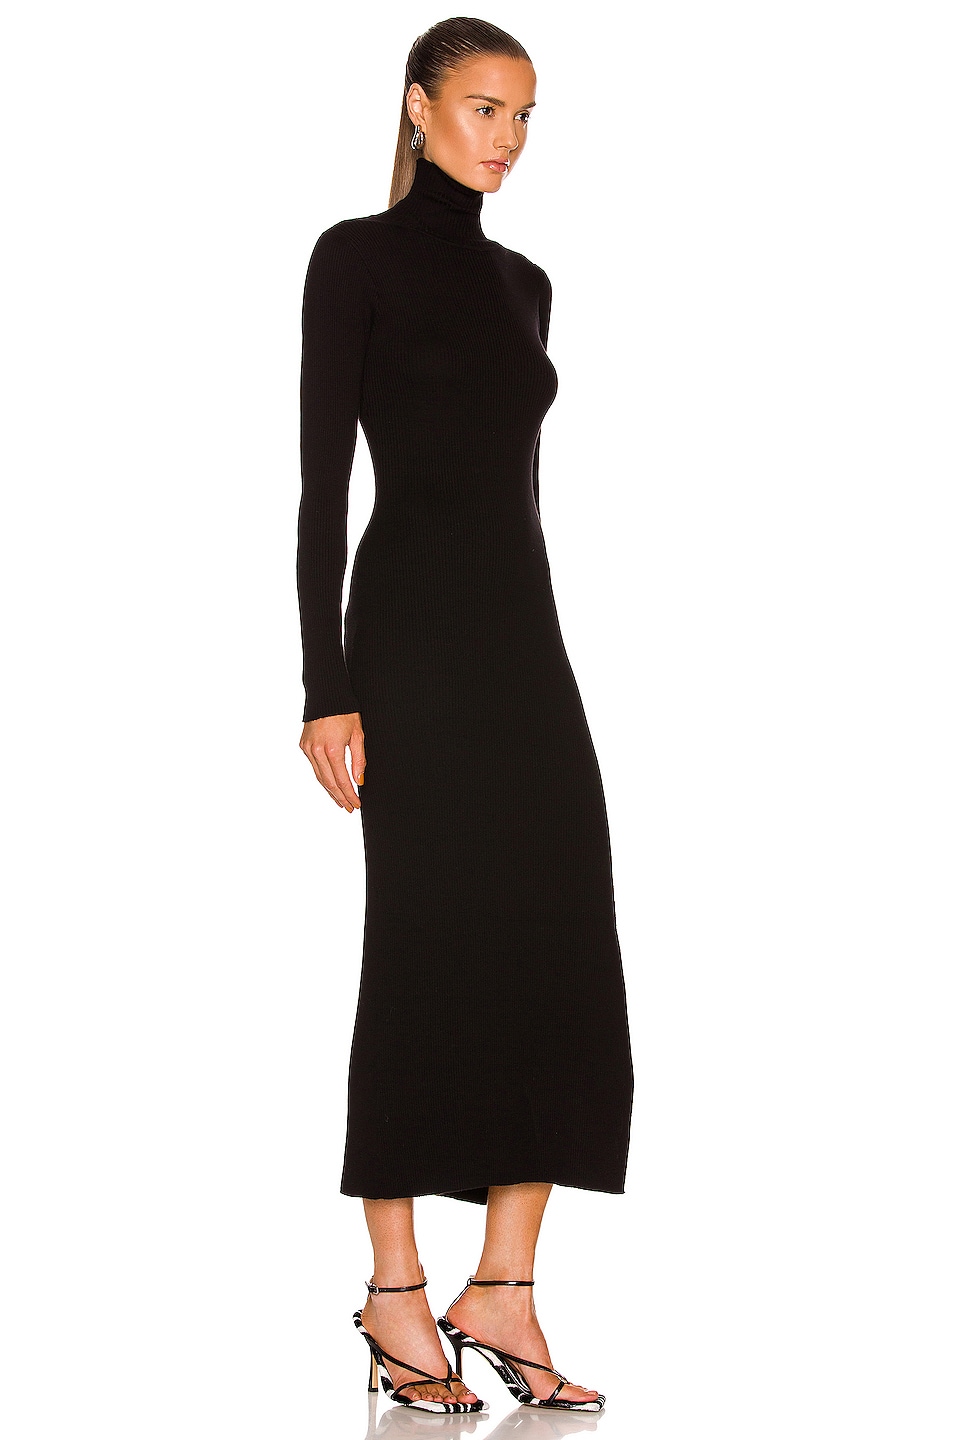 GREY VEN Kincaid Long Sleeve Turtleneck Dress in Black | FWRD